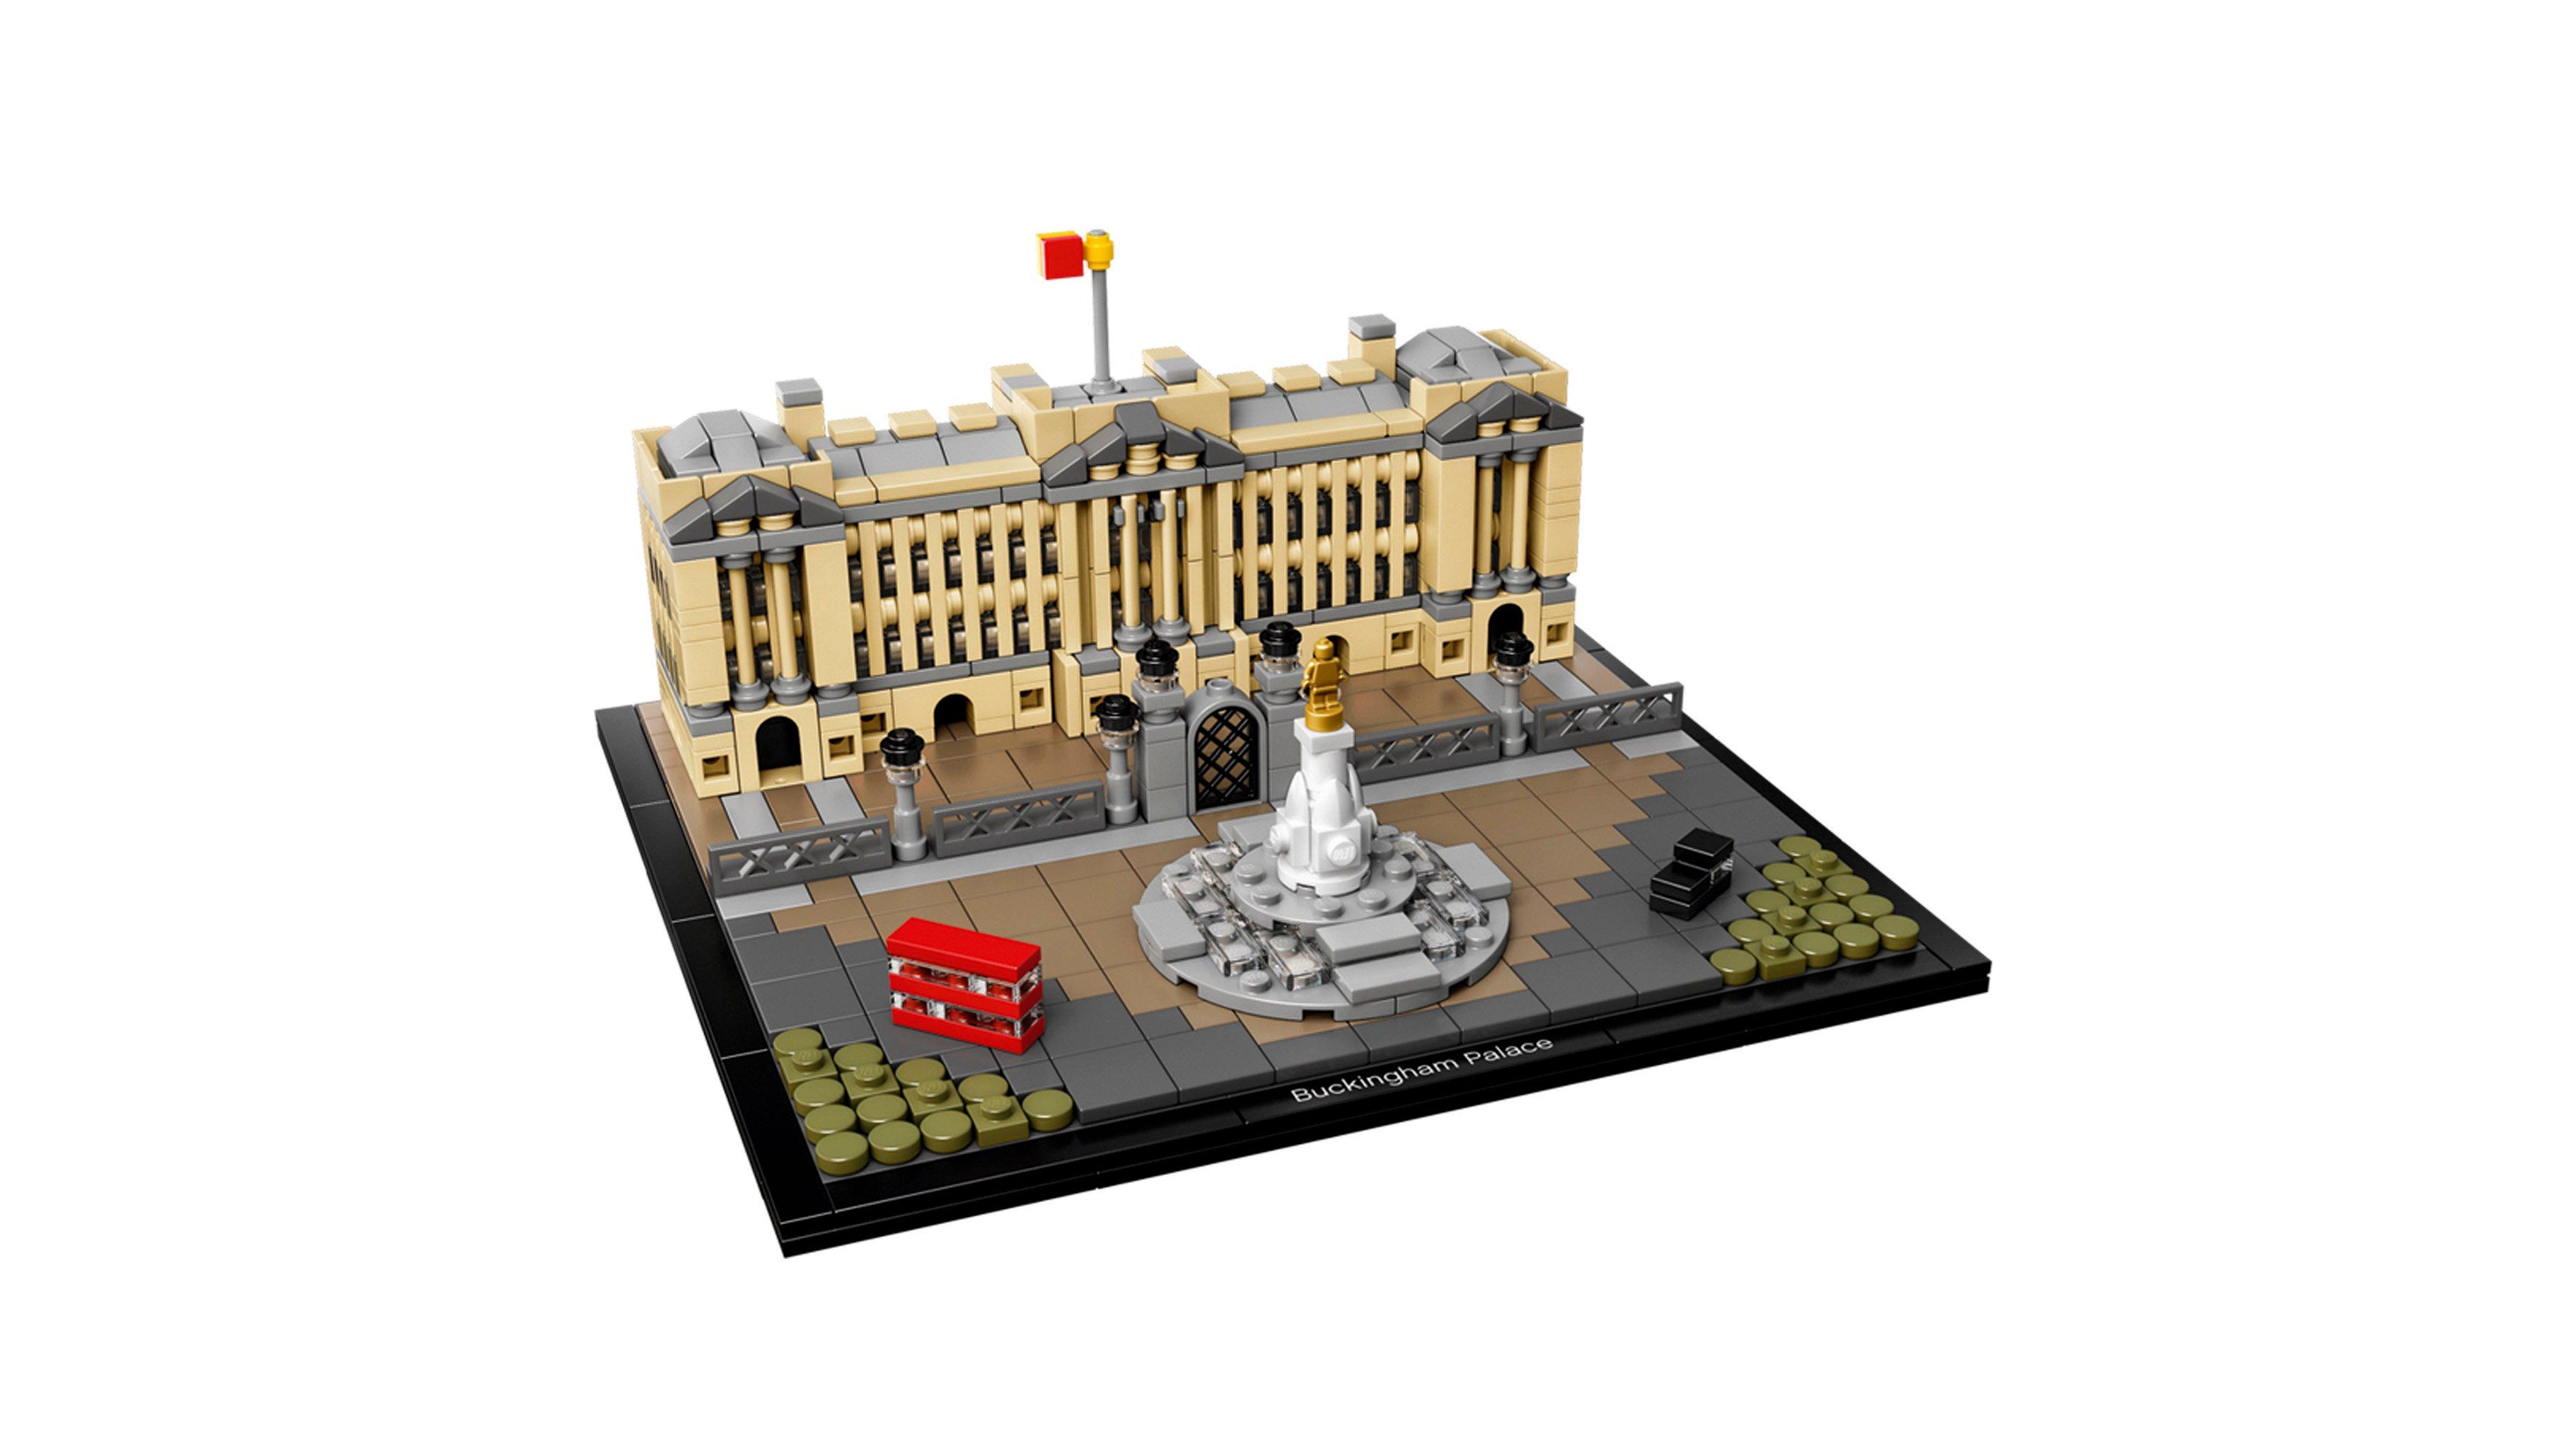 LEGO®  21029 Der Buckingham-Palast 